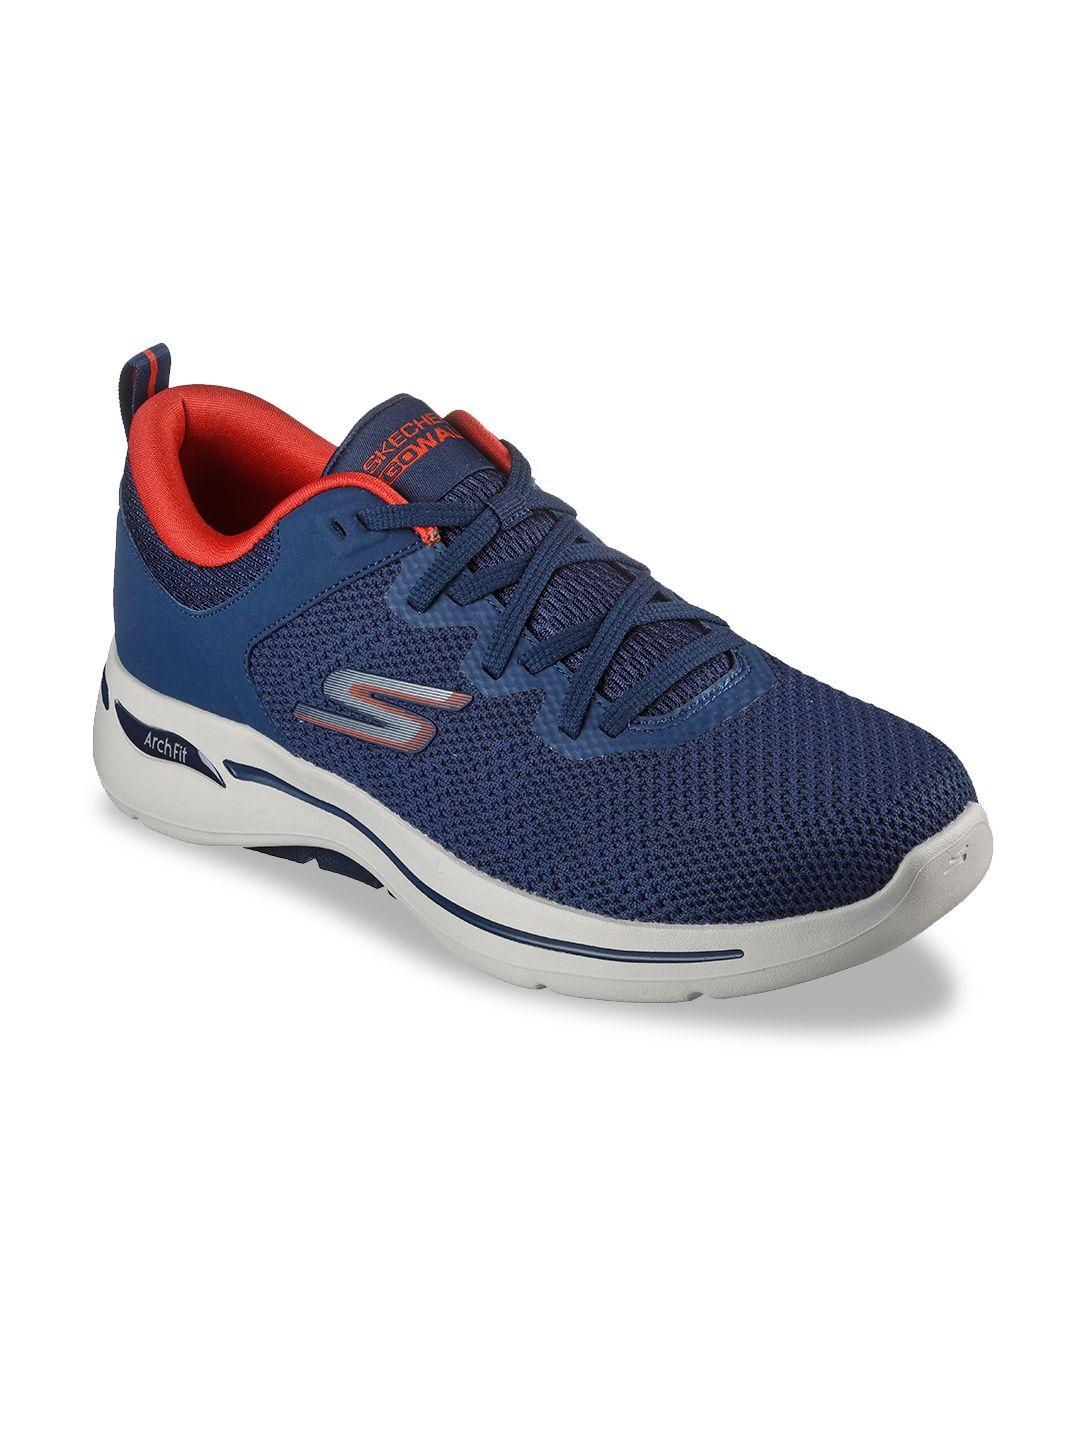 skechers-men-navy-blue-go-walk-walking-non-marking-shoes